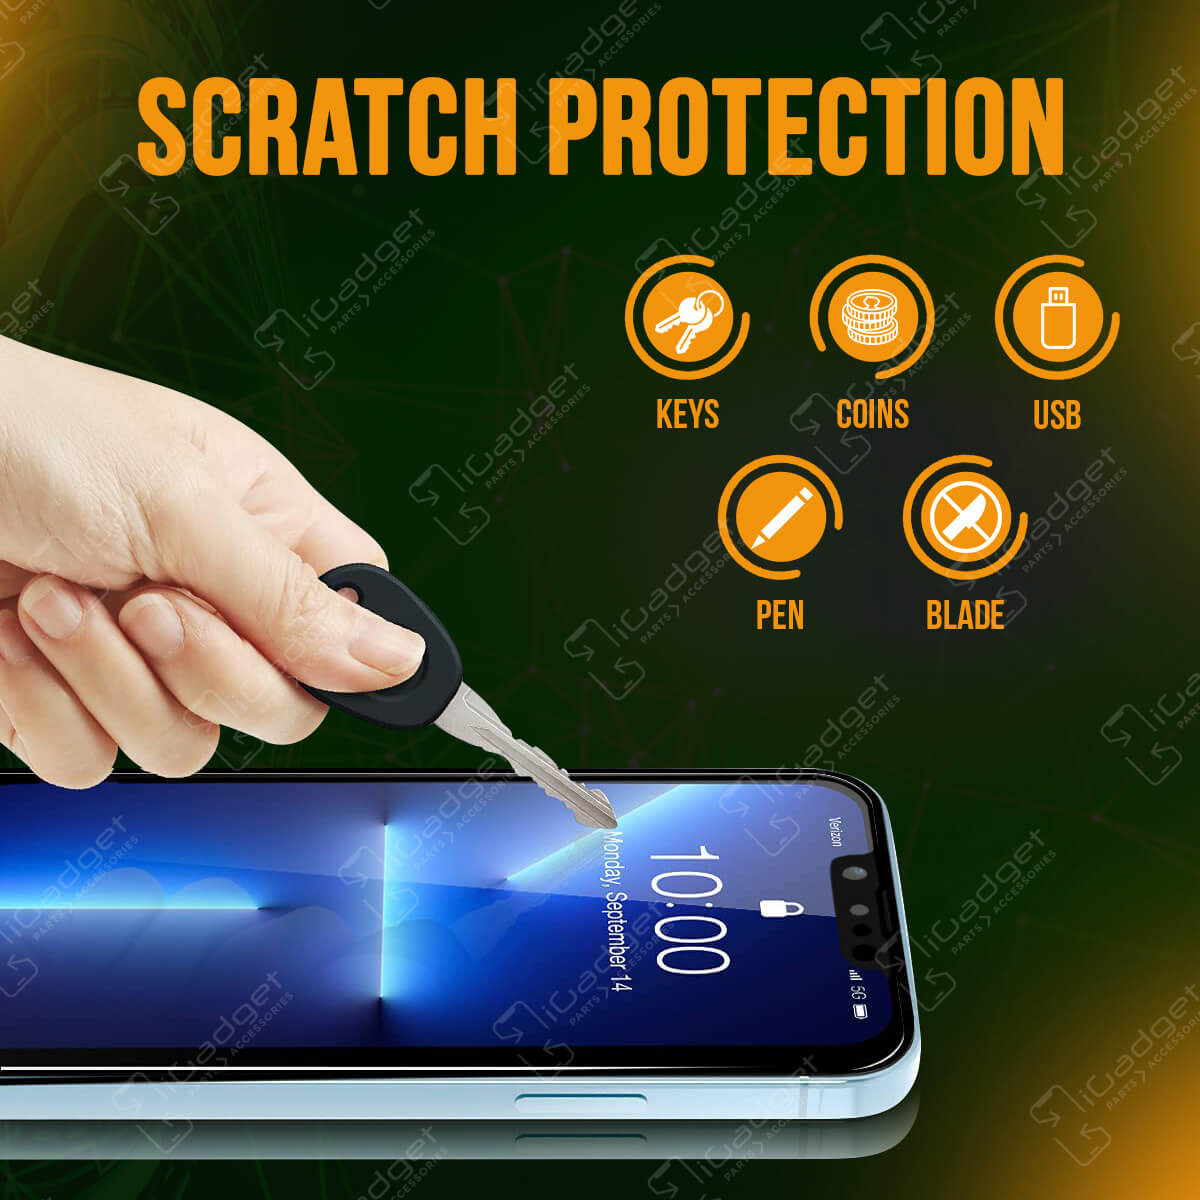 iGadget 3D Gummed Full Coverage Protector is scratch resistant from keys, coins, USB, pen, blade, etc.